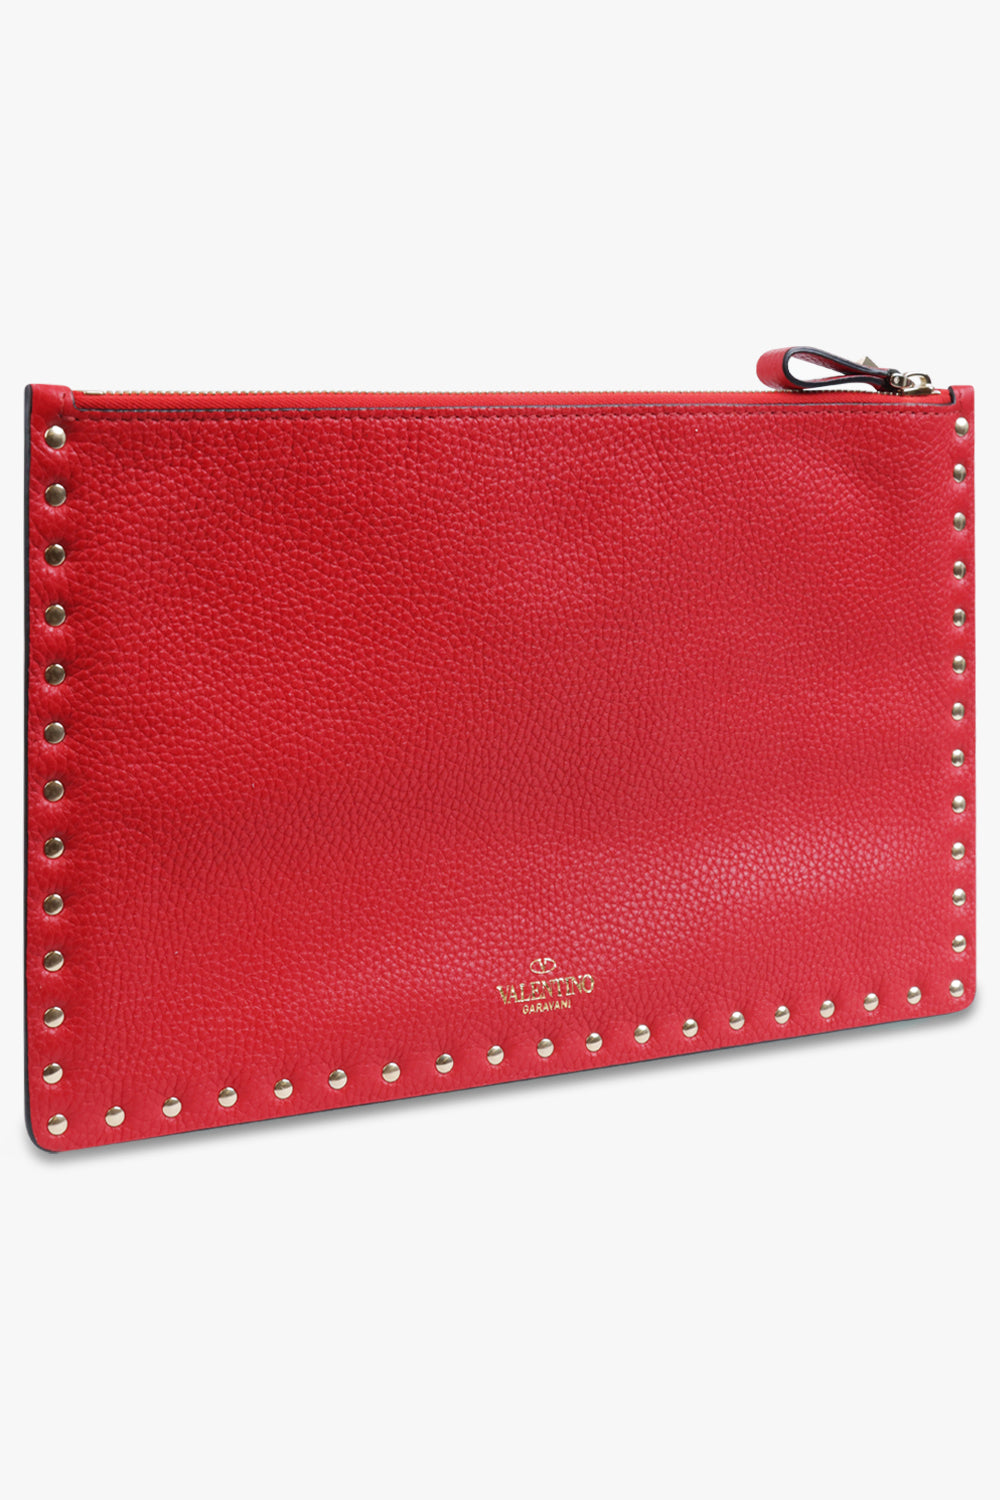 REDValentino Heart Leather Envelope Clutch Bag - Closet Upgrade